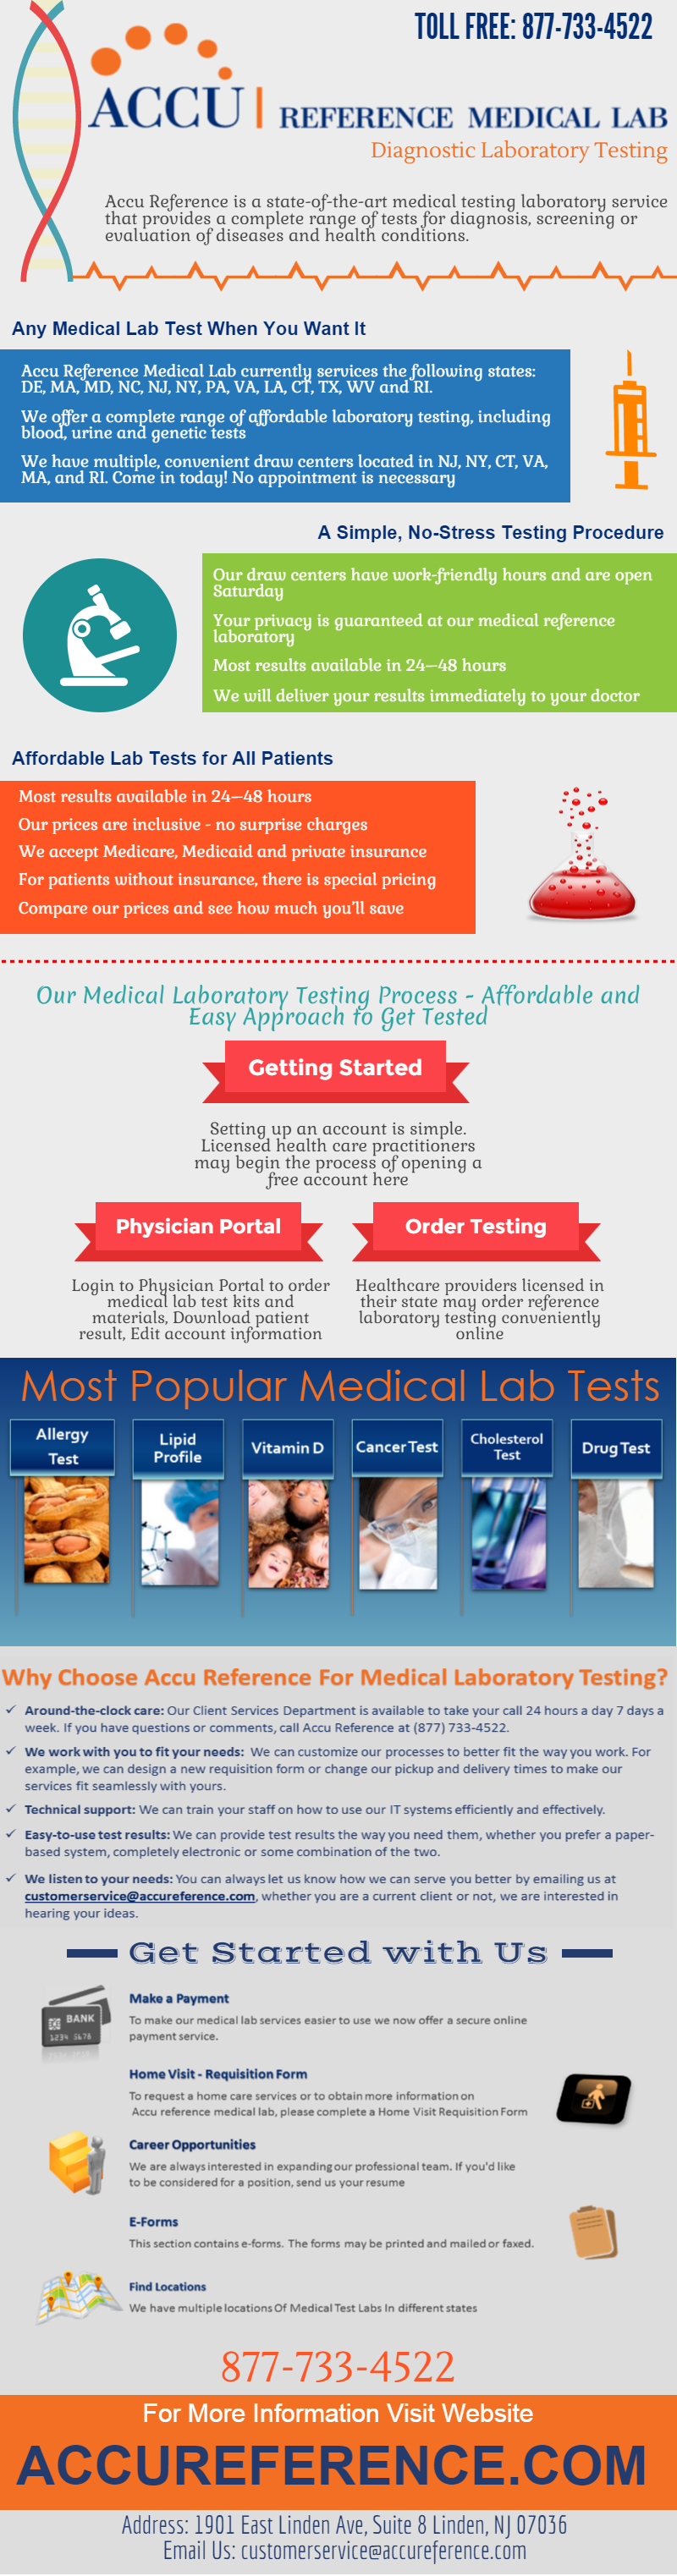 Medical Lab Testing Services MA & RI